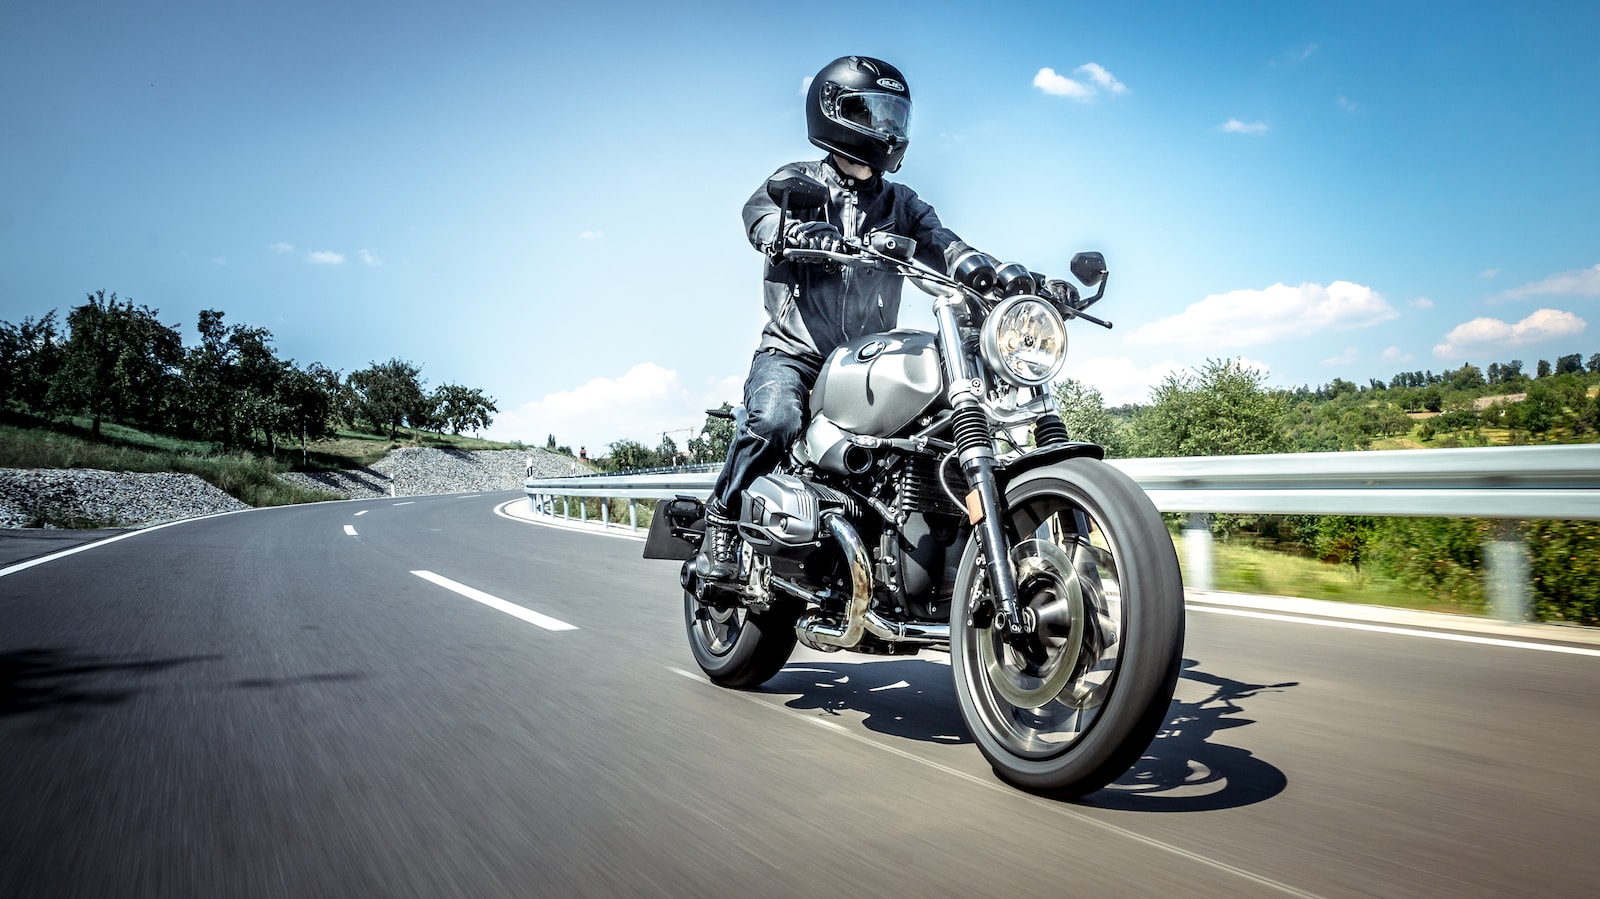 man in black helmet riding on black motorcycle on road during daytime